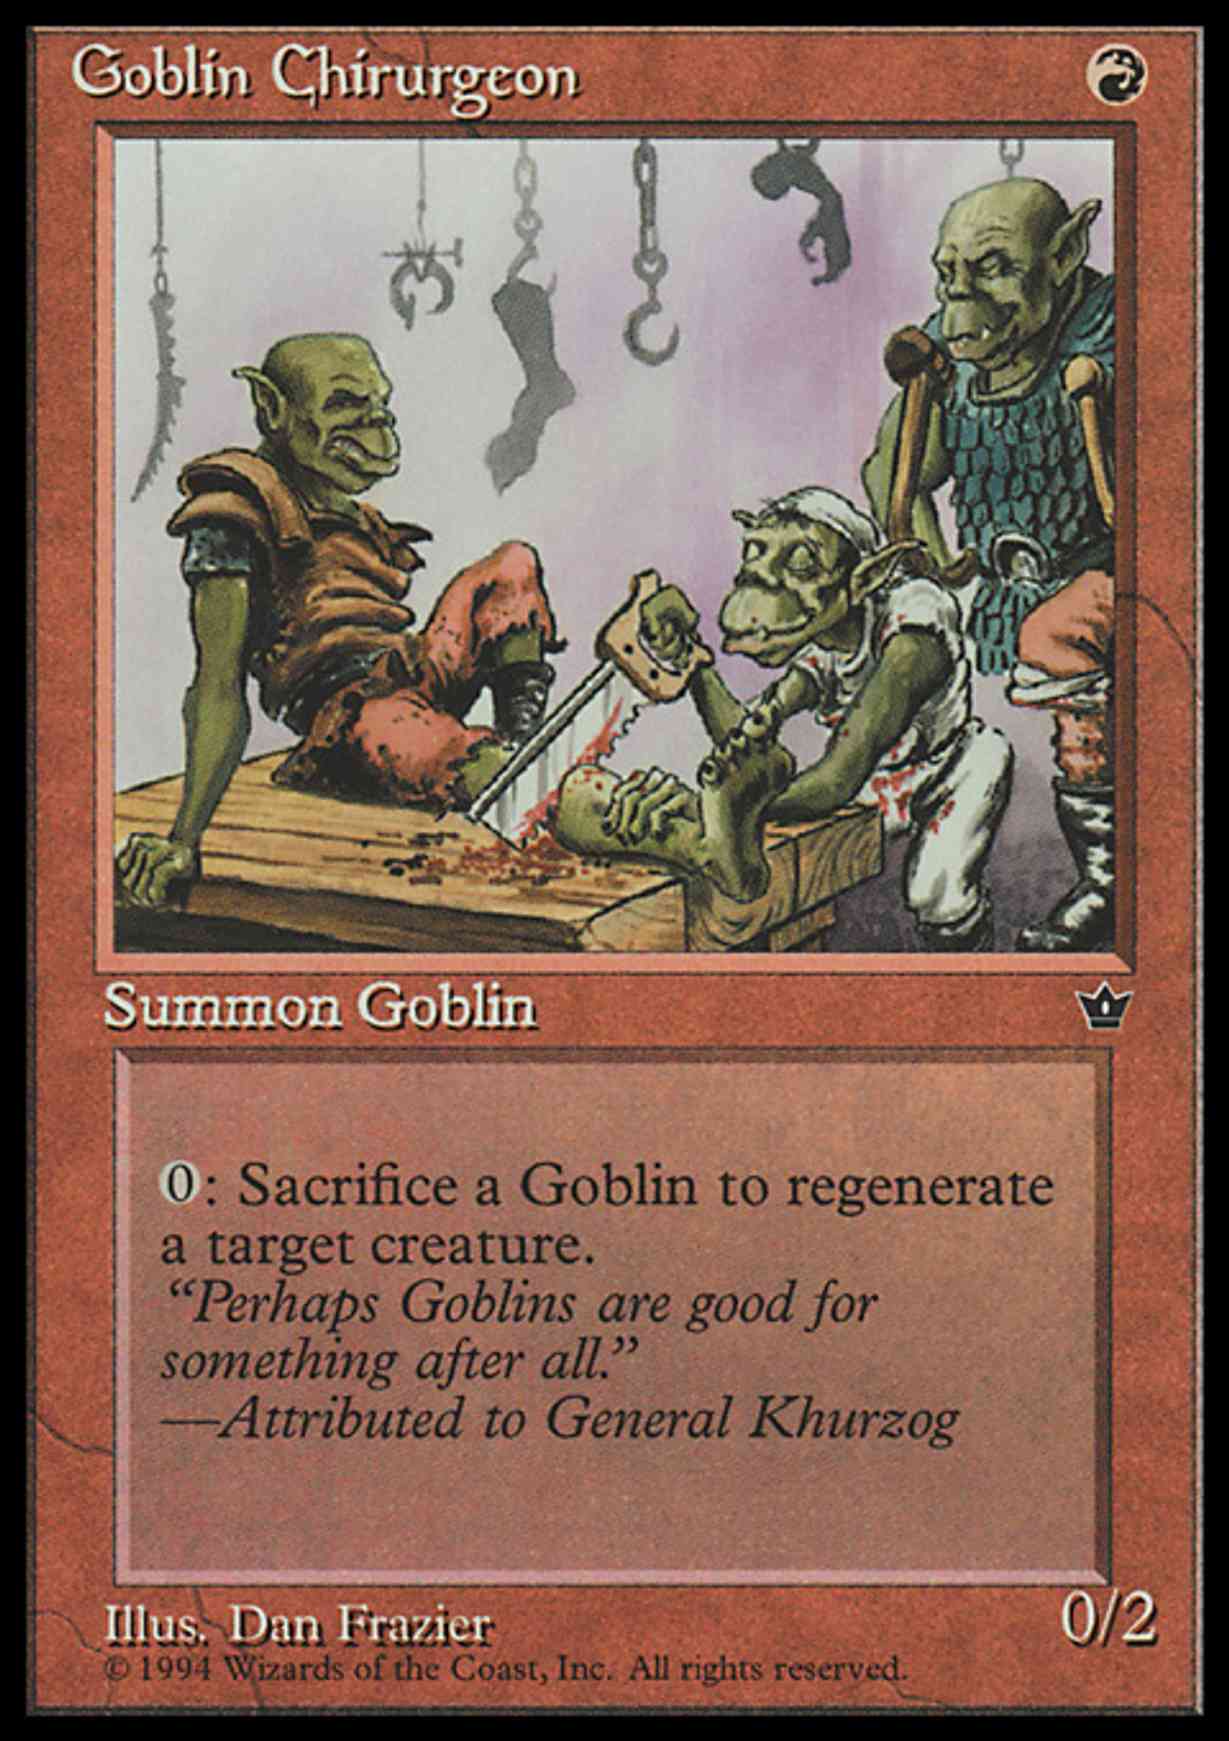 Goblin Chirurgeon (Frazier) magic card front